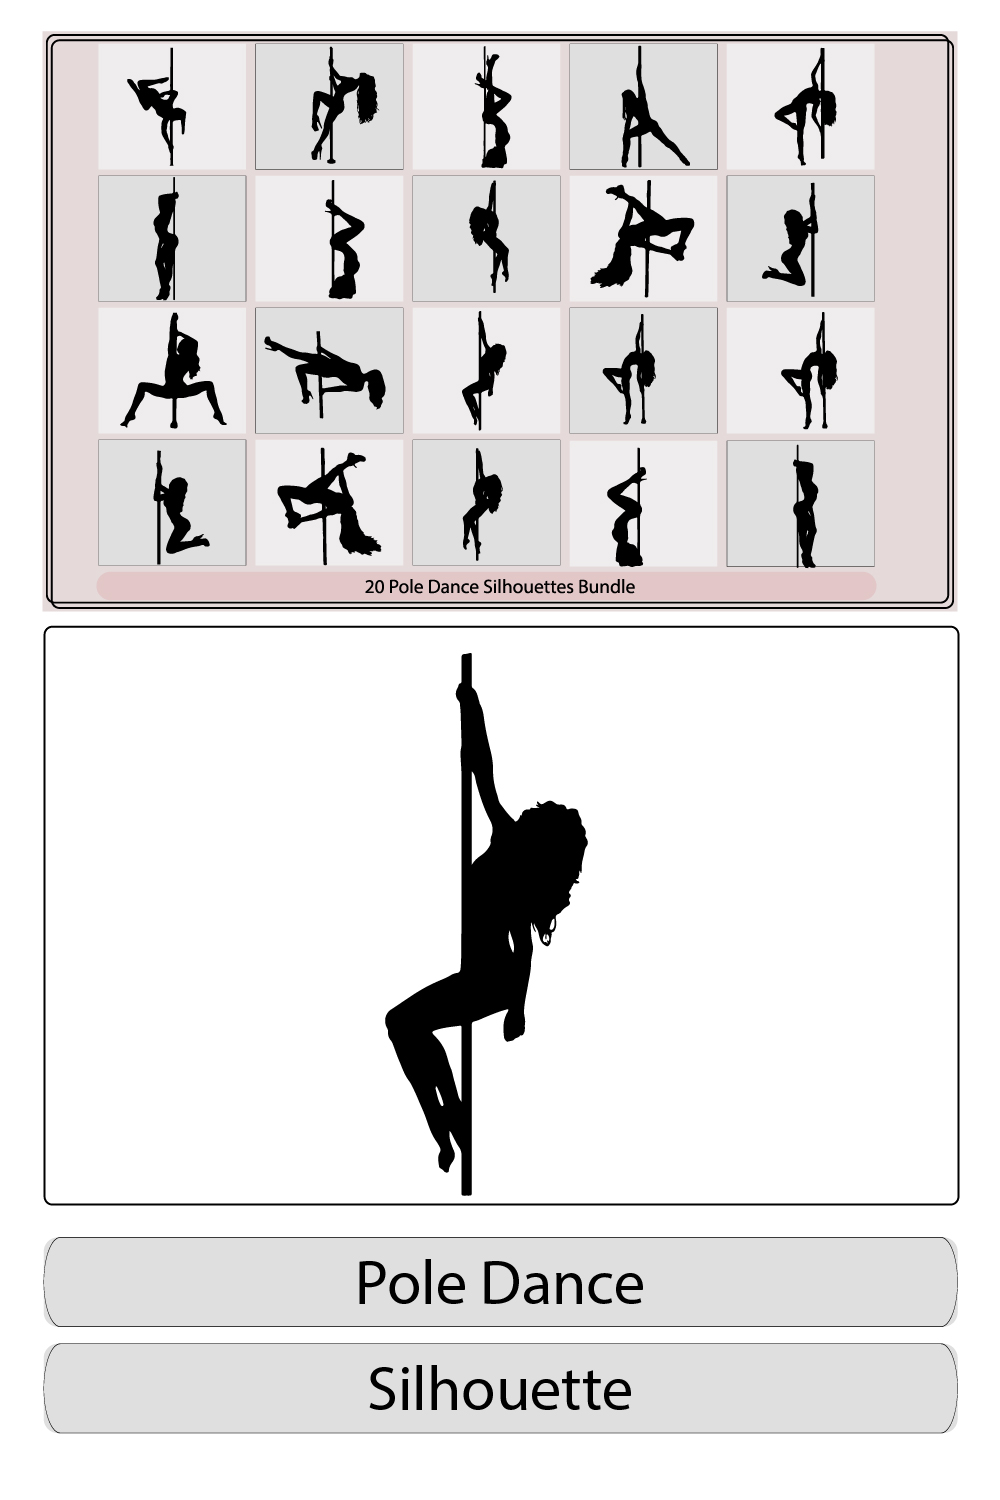 Pole dance women silhouettes,Pole dancer silhouettes,pole girl illustration dancer, Vector setsilhouette of girl and pole Dance, pinterest preview image.